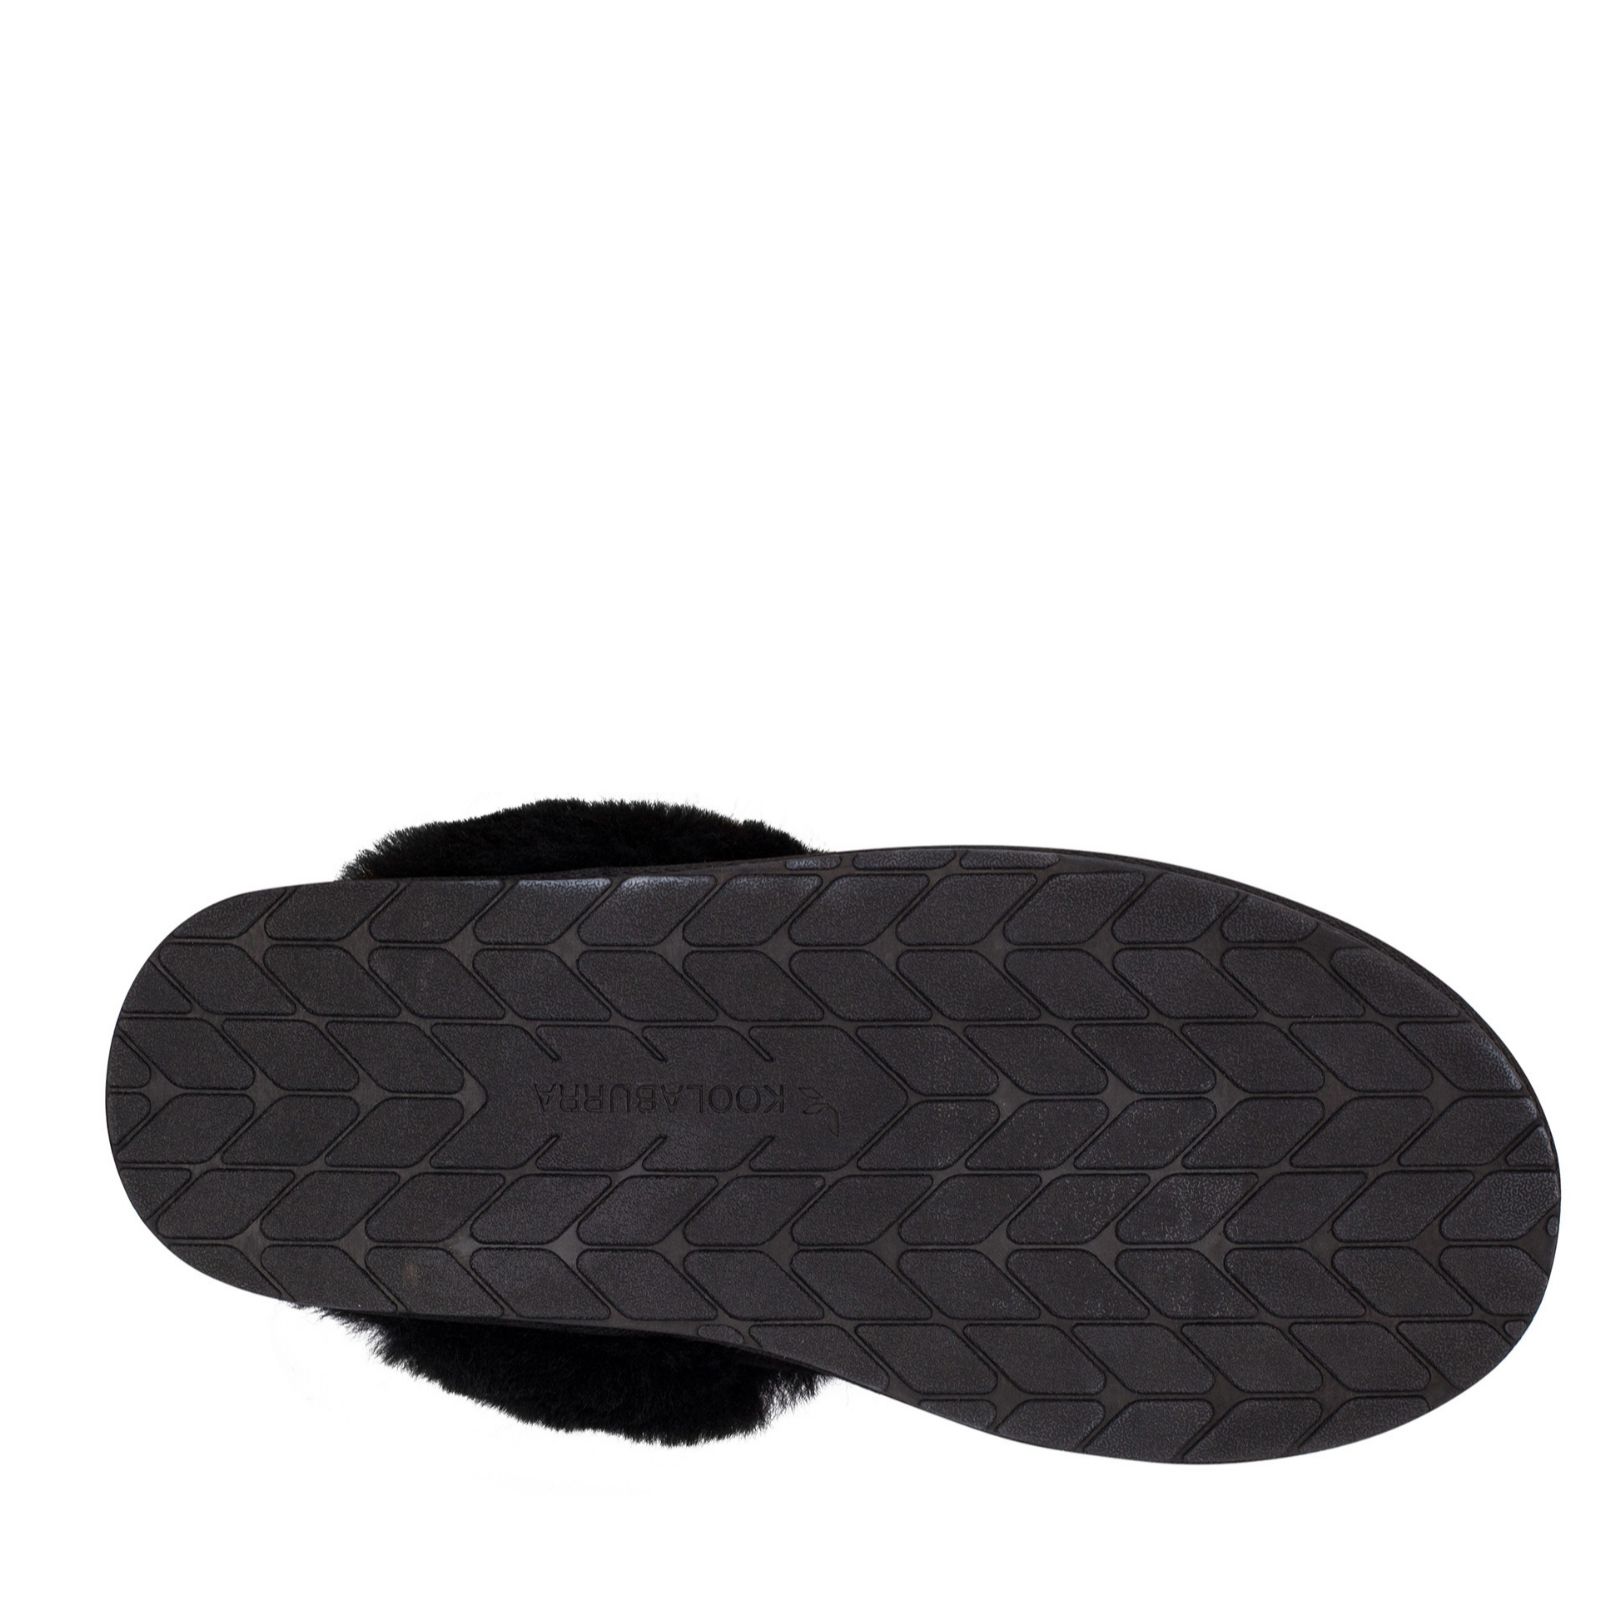 qvc ugg slippers